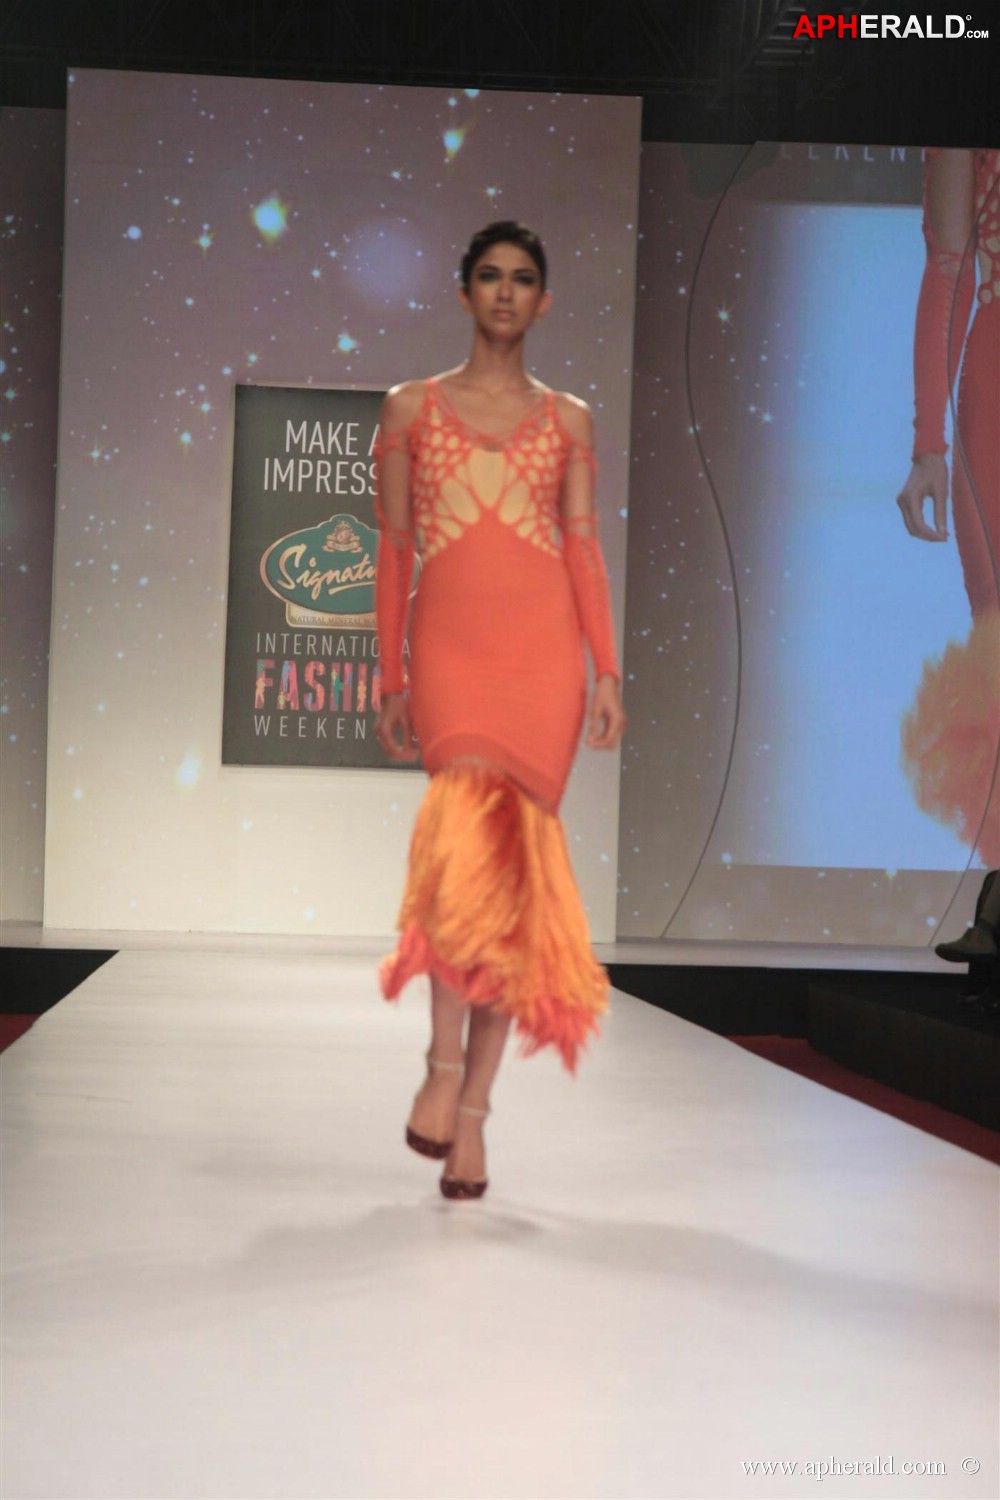 Sonam Kapoor at Signature International Fashion Weekend